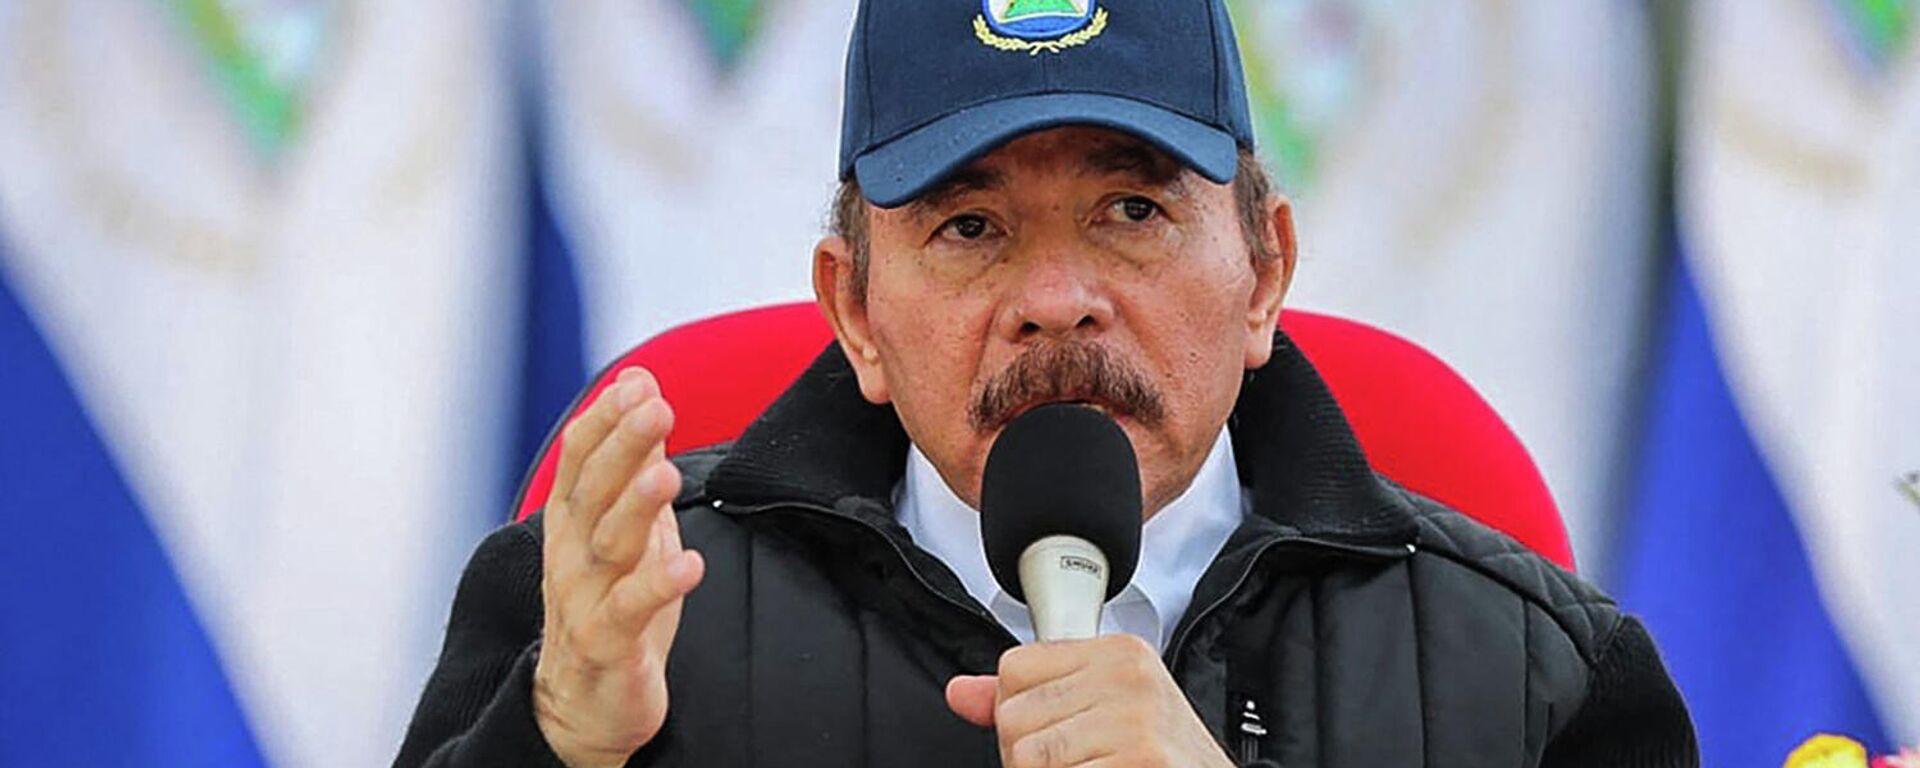 Daniel Ortega, presidente de Nicaragua - Sputnik Mundo, 1920, 07.11.2021